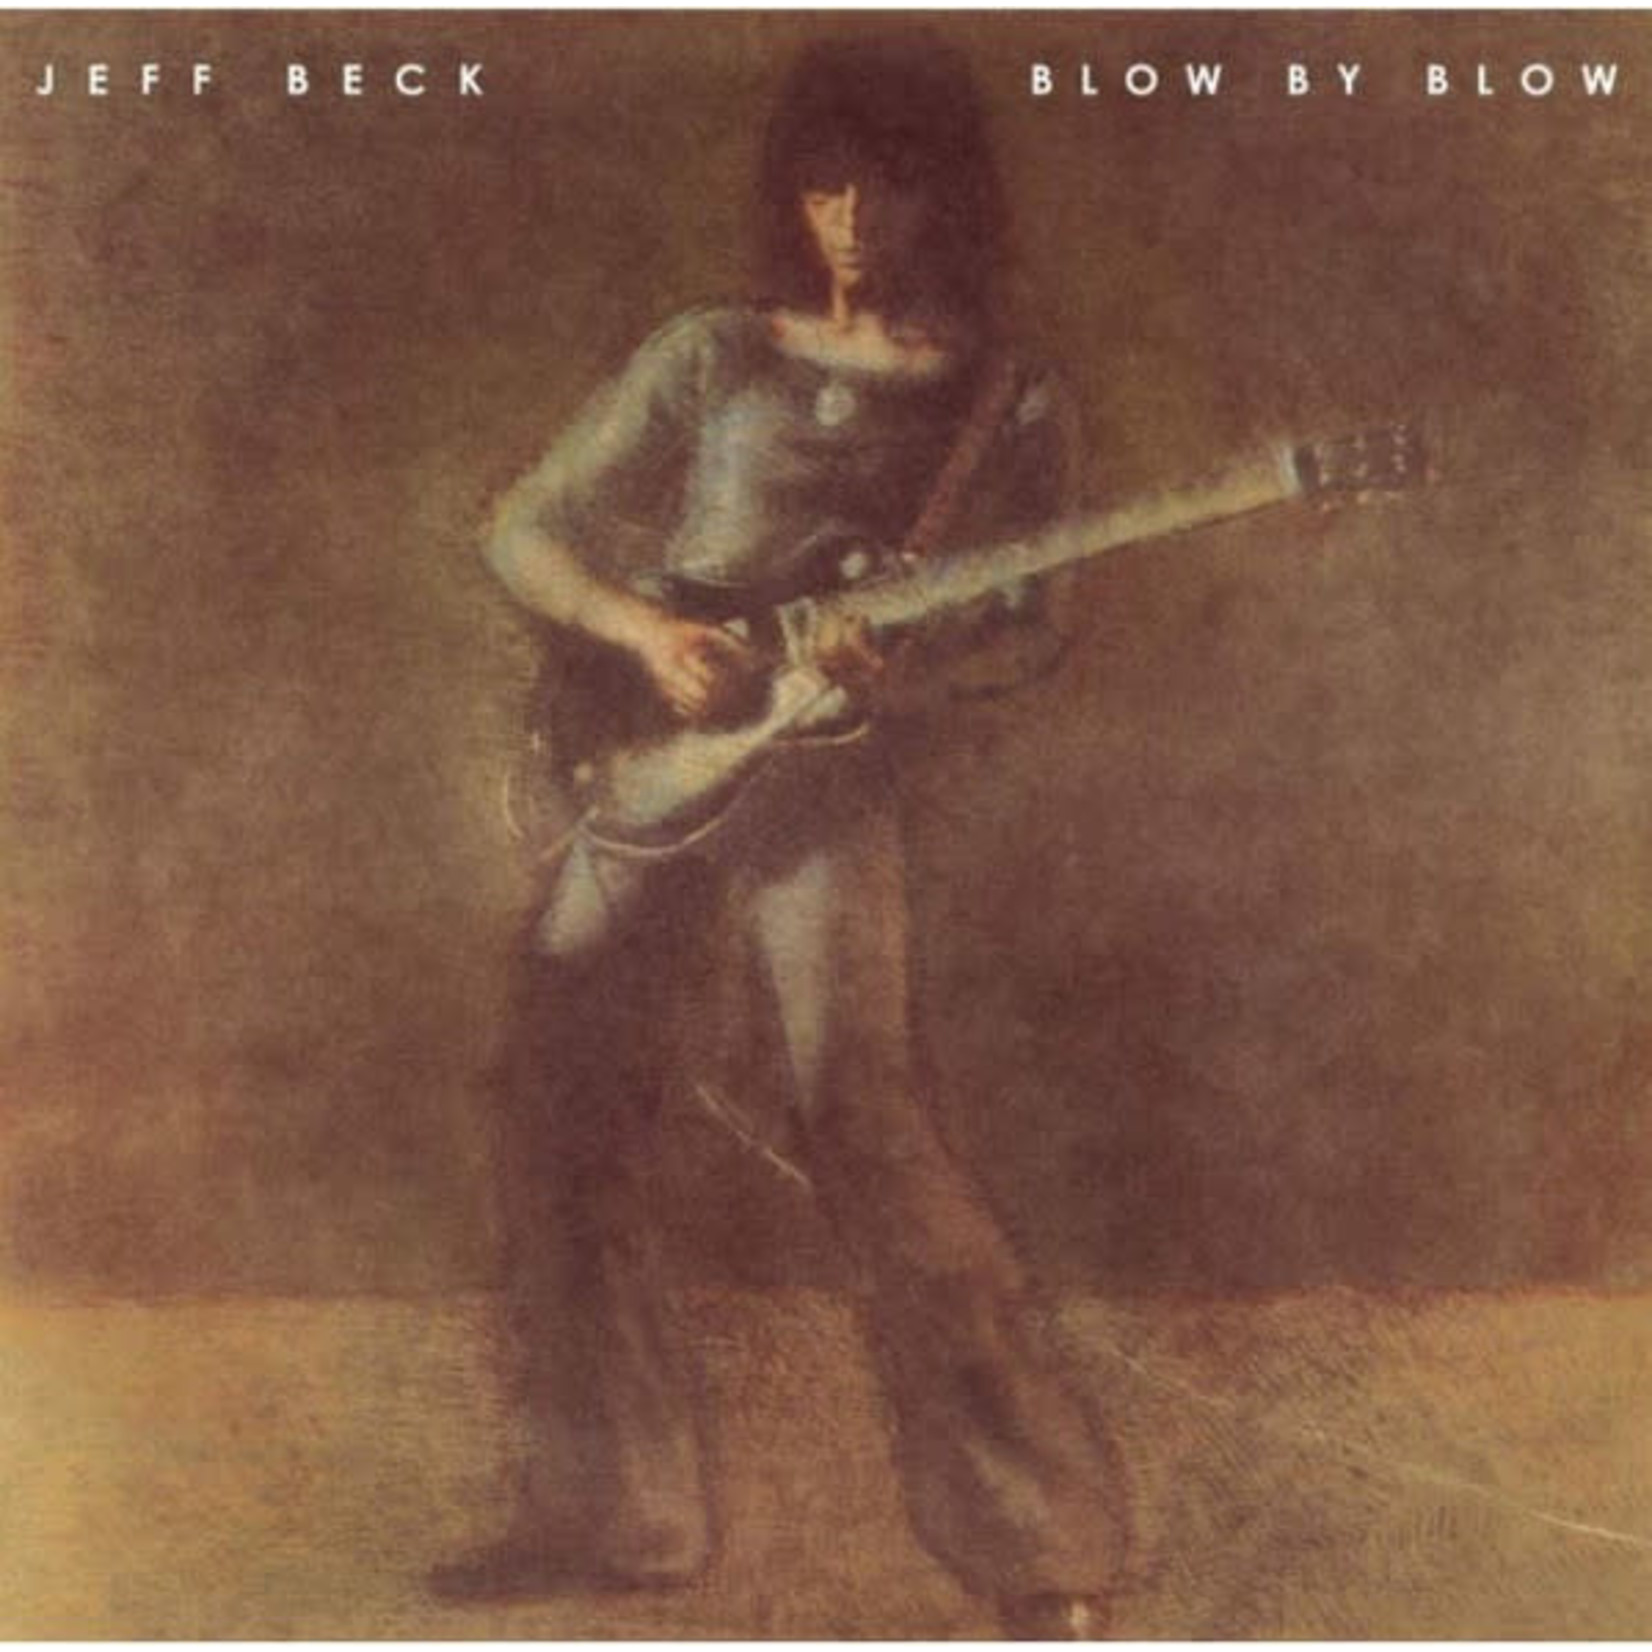 [New] Jeff Beck - Blow By Blow (orange vinyl)